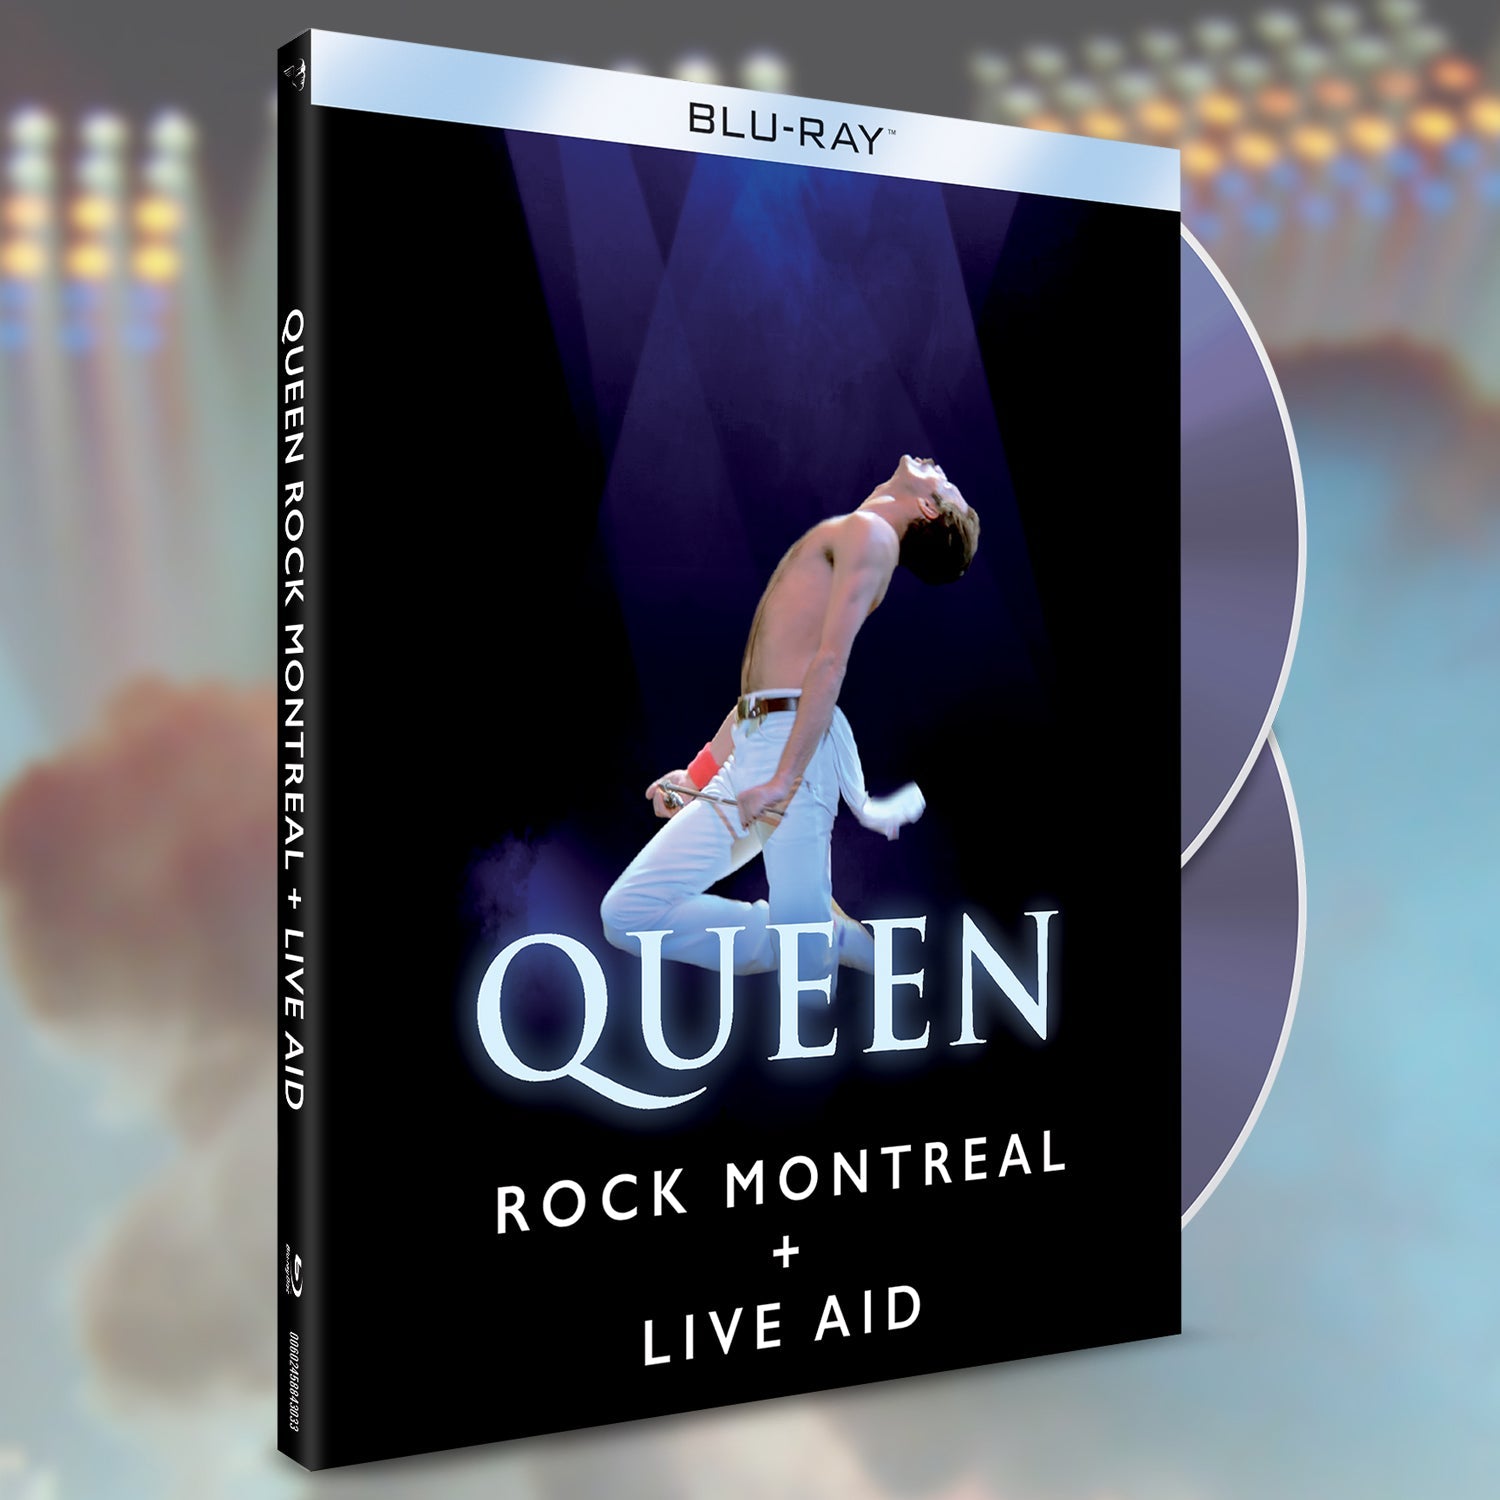 Rock Montreal Blu-ray & T-Shirt.